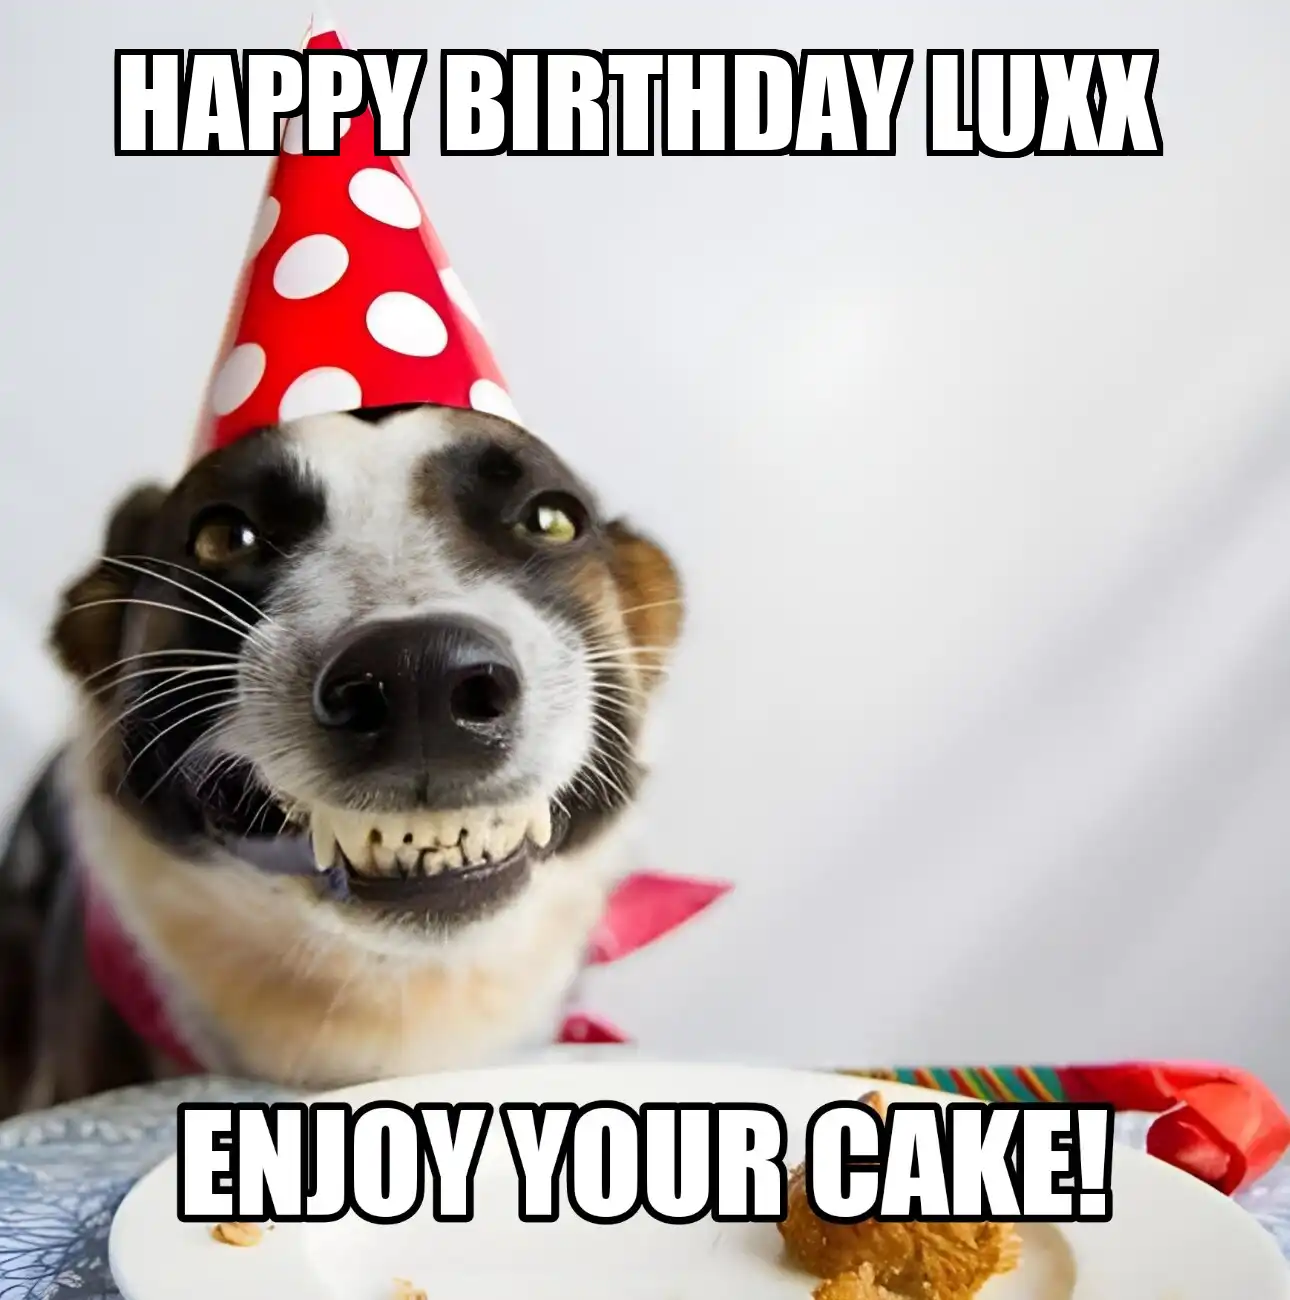 Happy Birthday Luxx Enjoy Your Cake Dog Meme